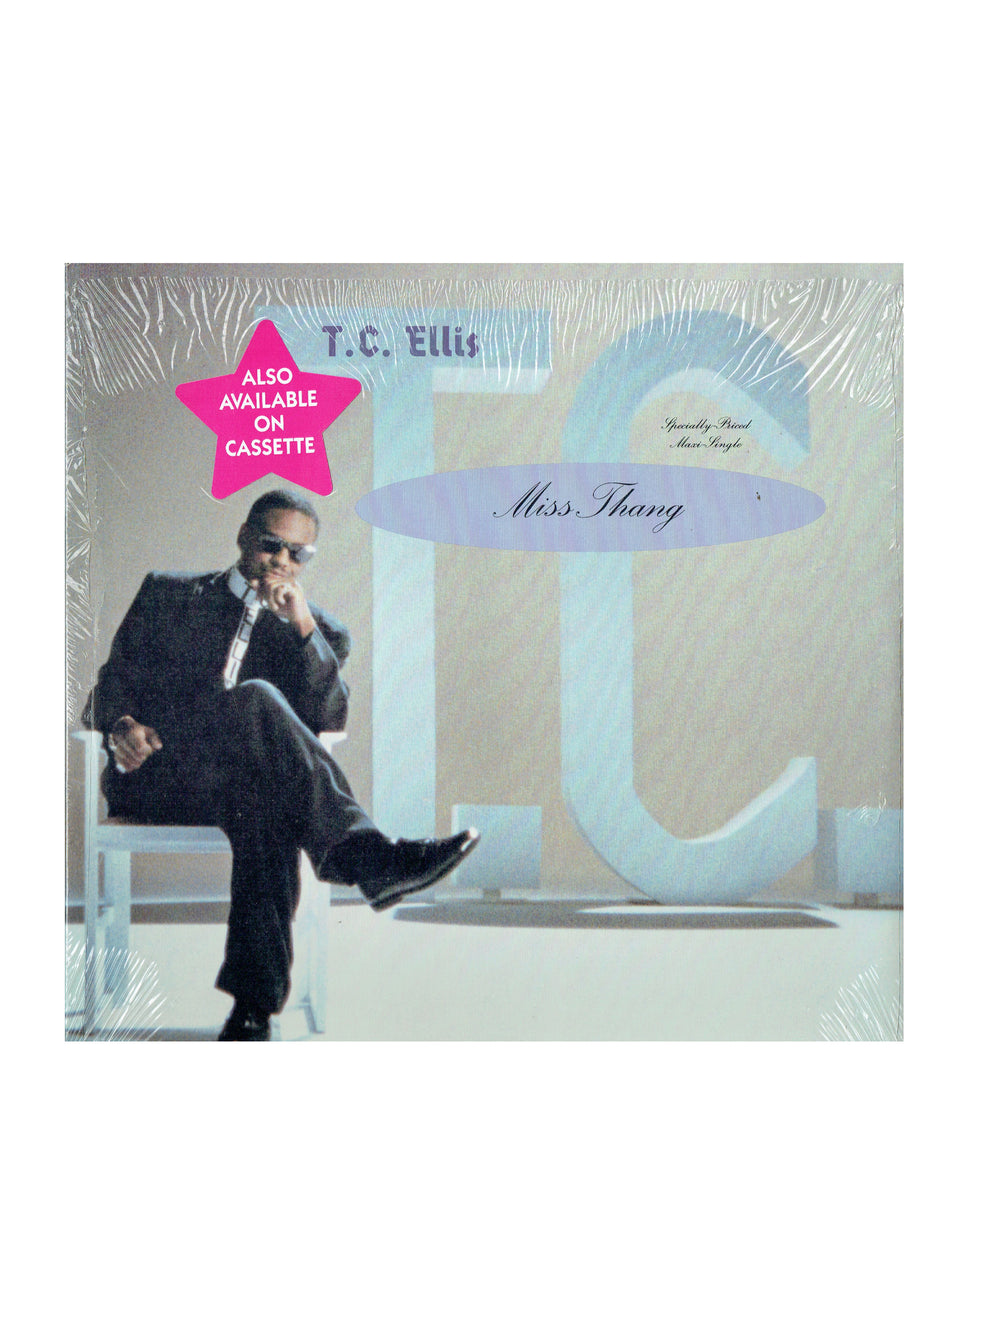 Prince – T.C Ellis Miss Thang Vinyl 12" Maxi Single US Preloved: 1991